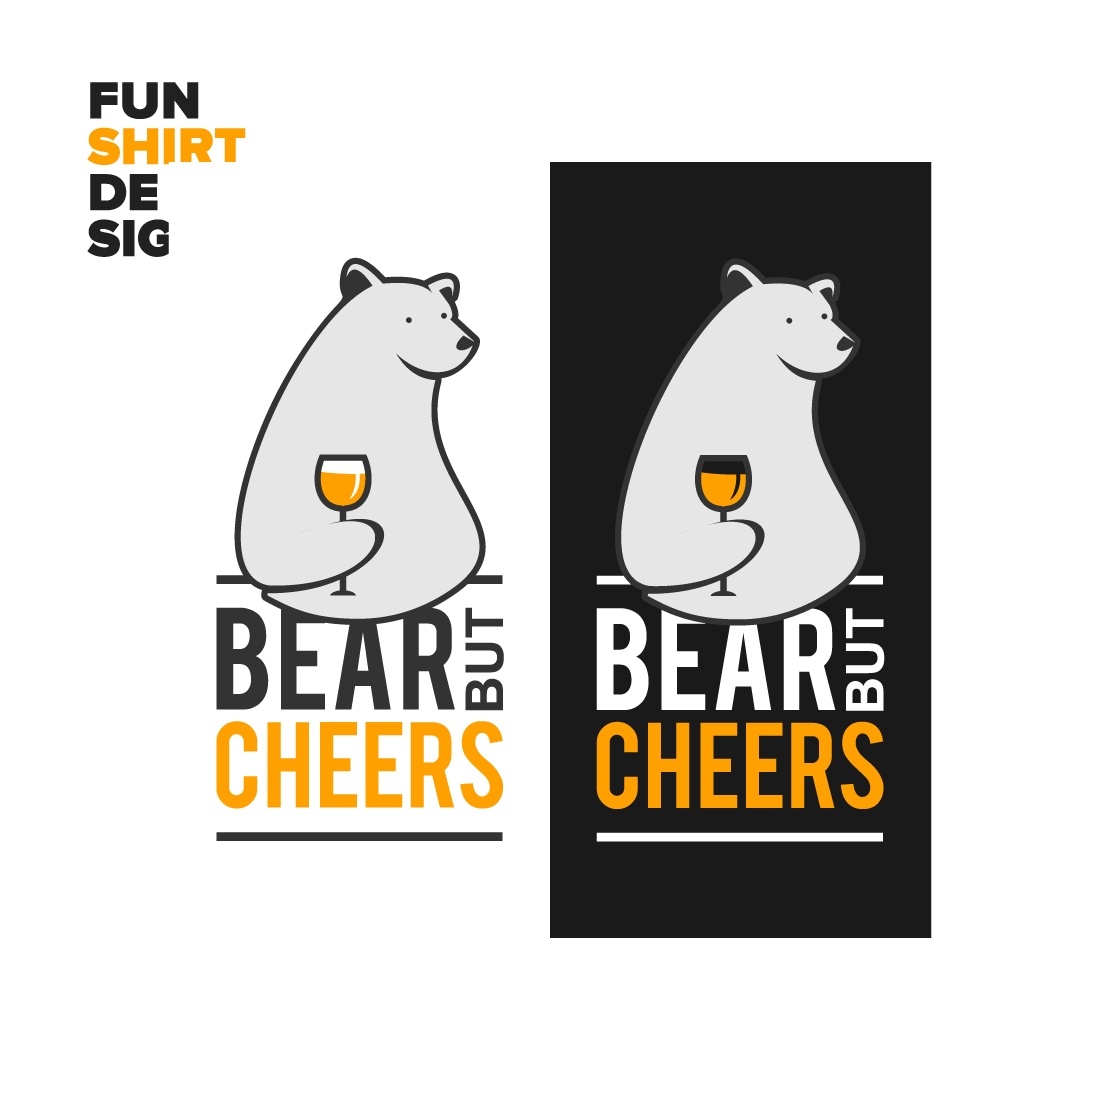 Fun T-shirt Bearish Design cover image.